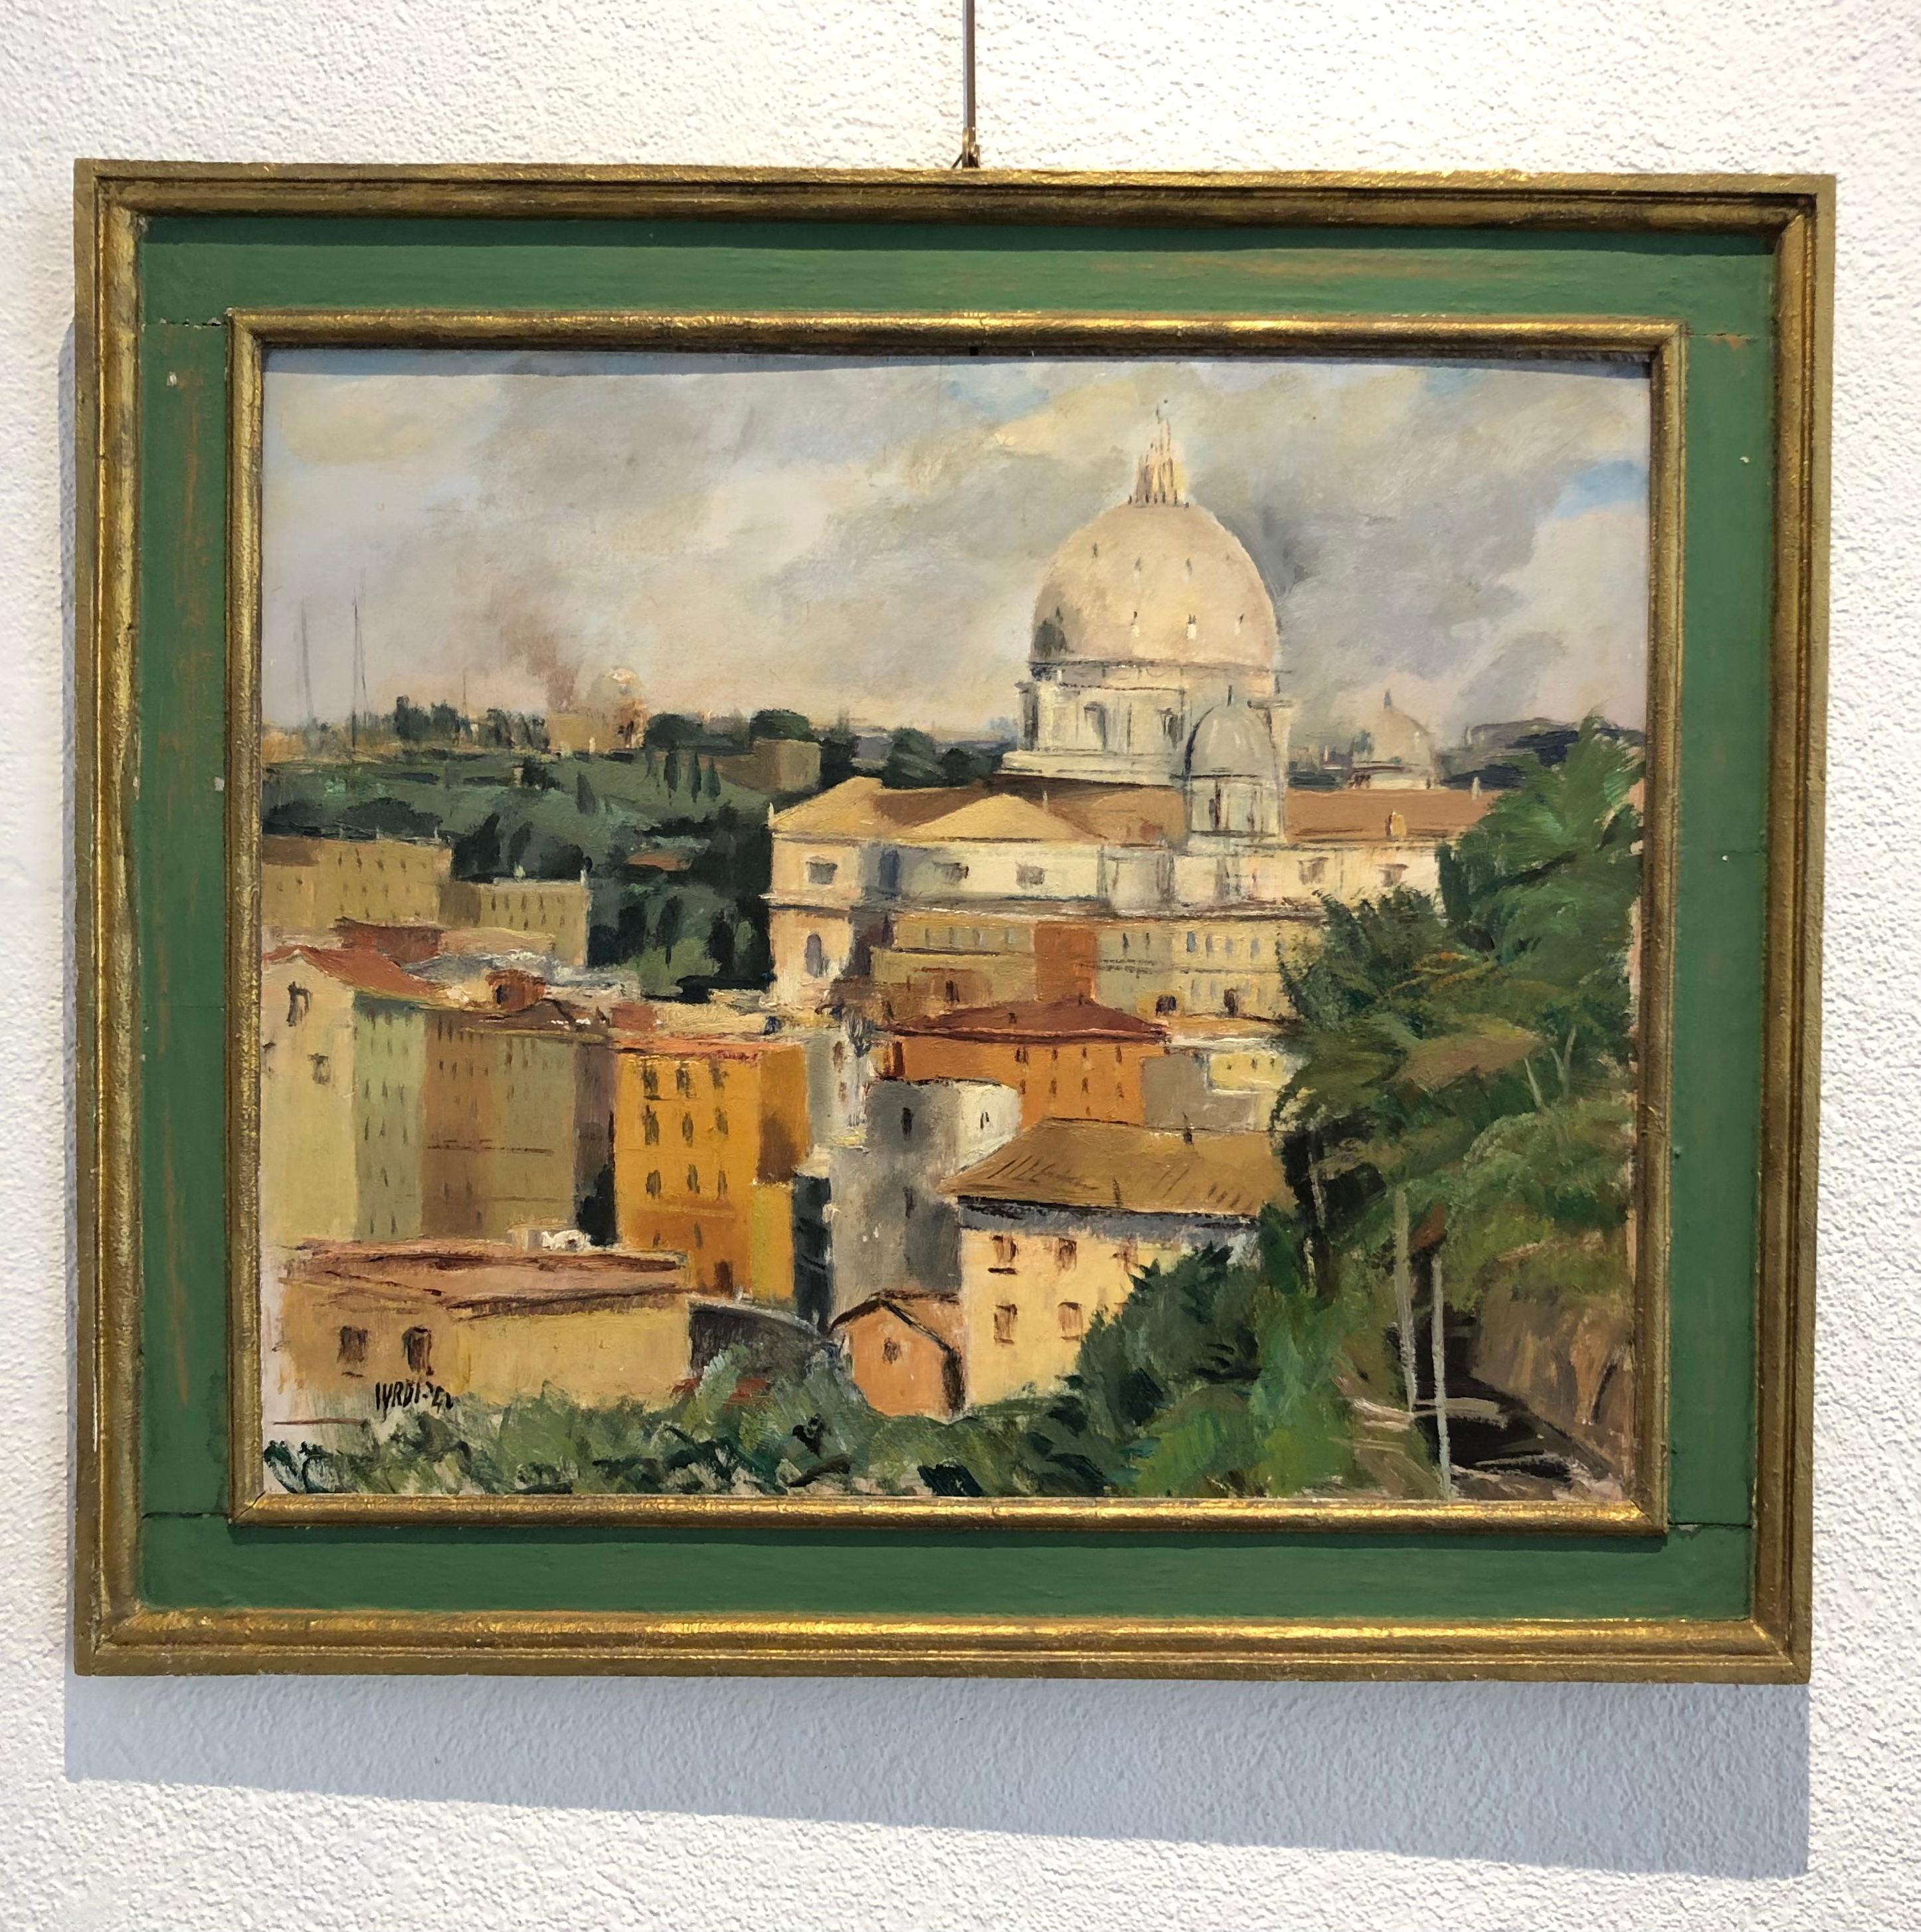 St. Peter's Basilica, Rome - Painting by Luigi Surdi